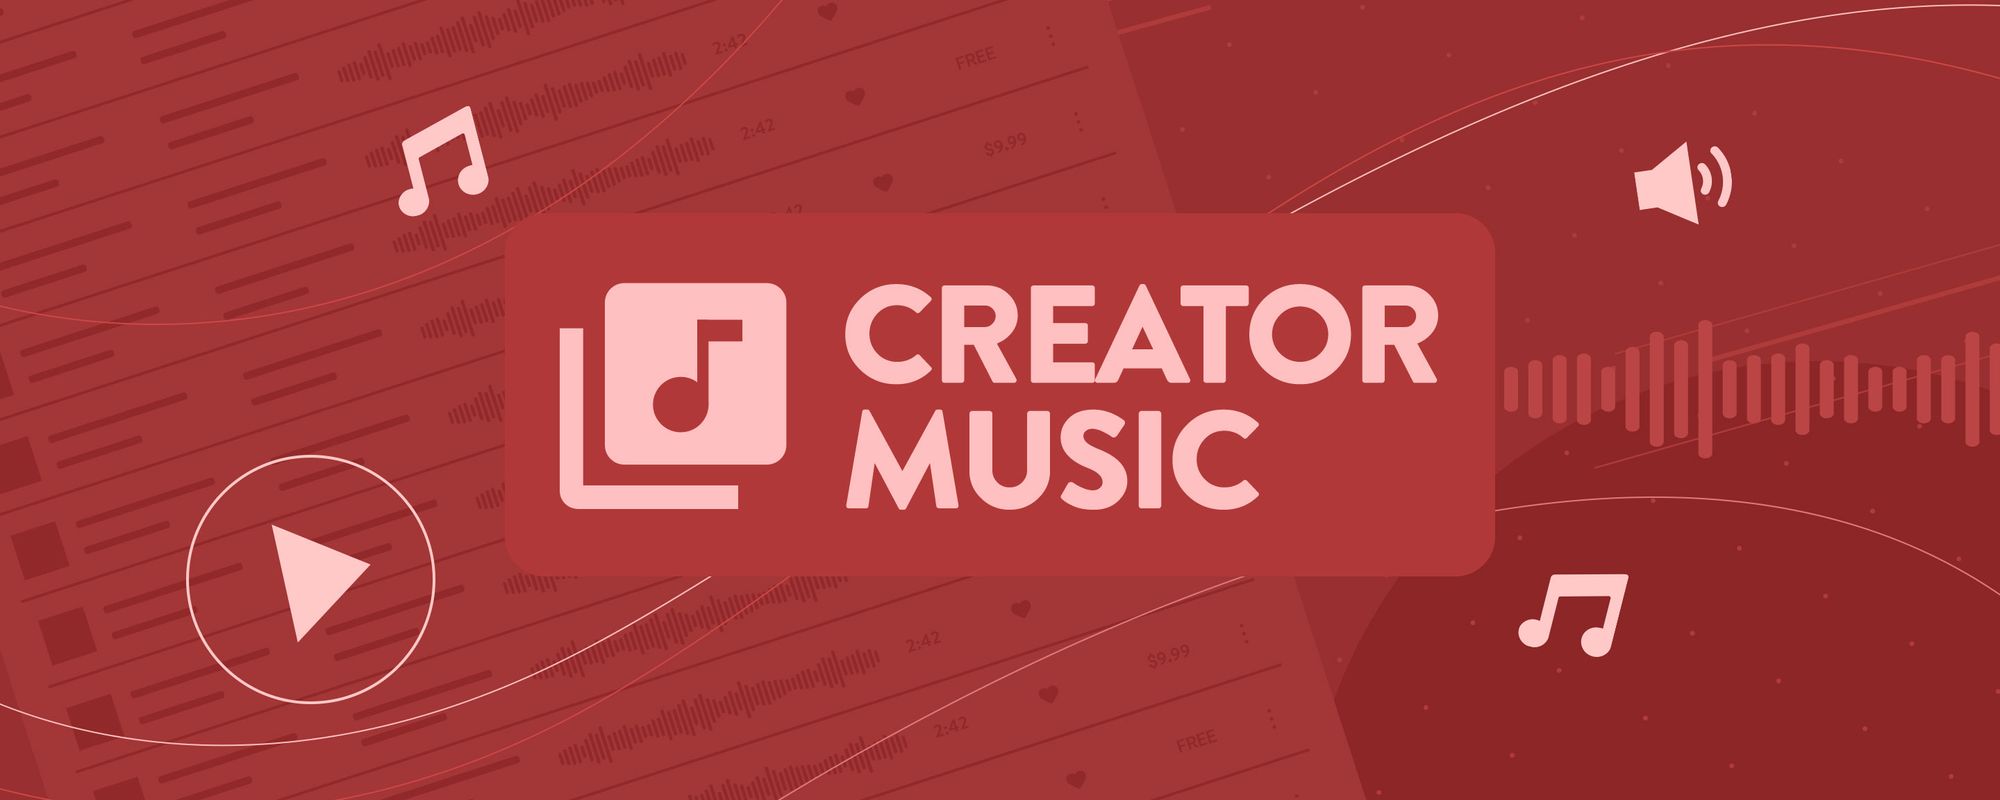 Illustration of the YouTube Creator Music logo.